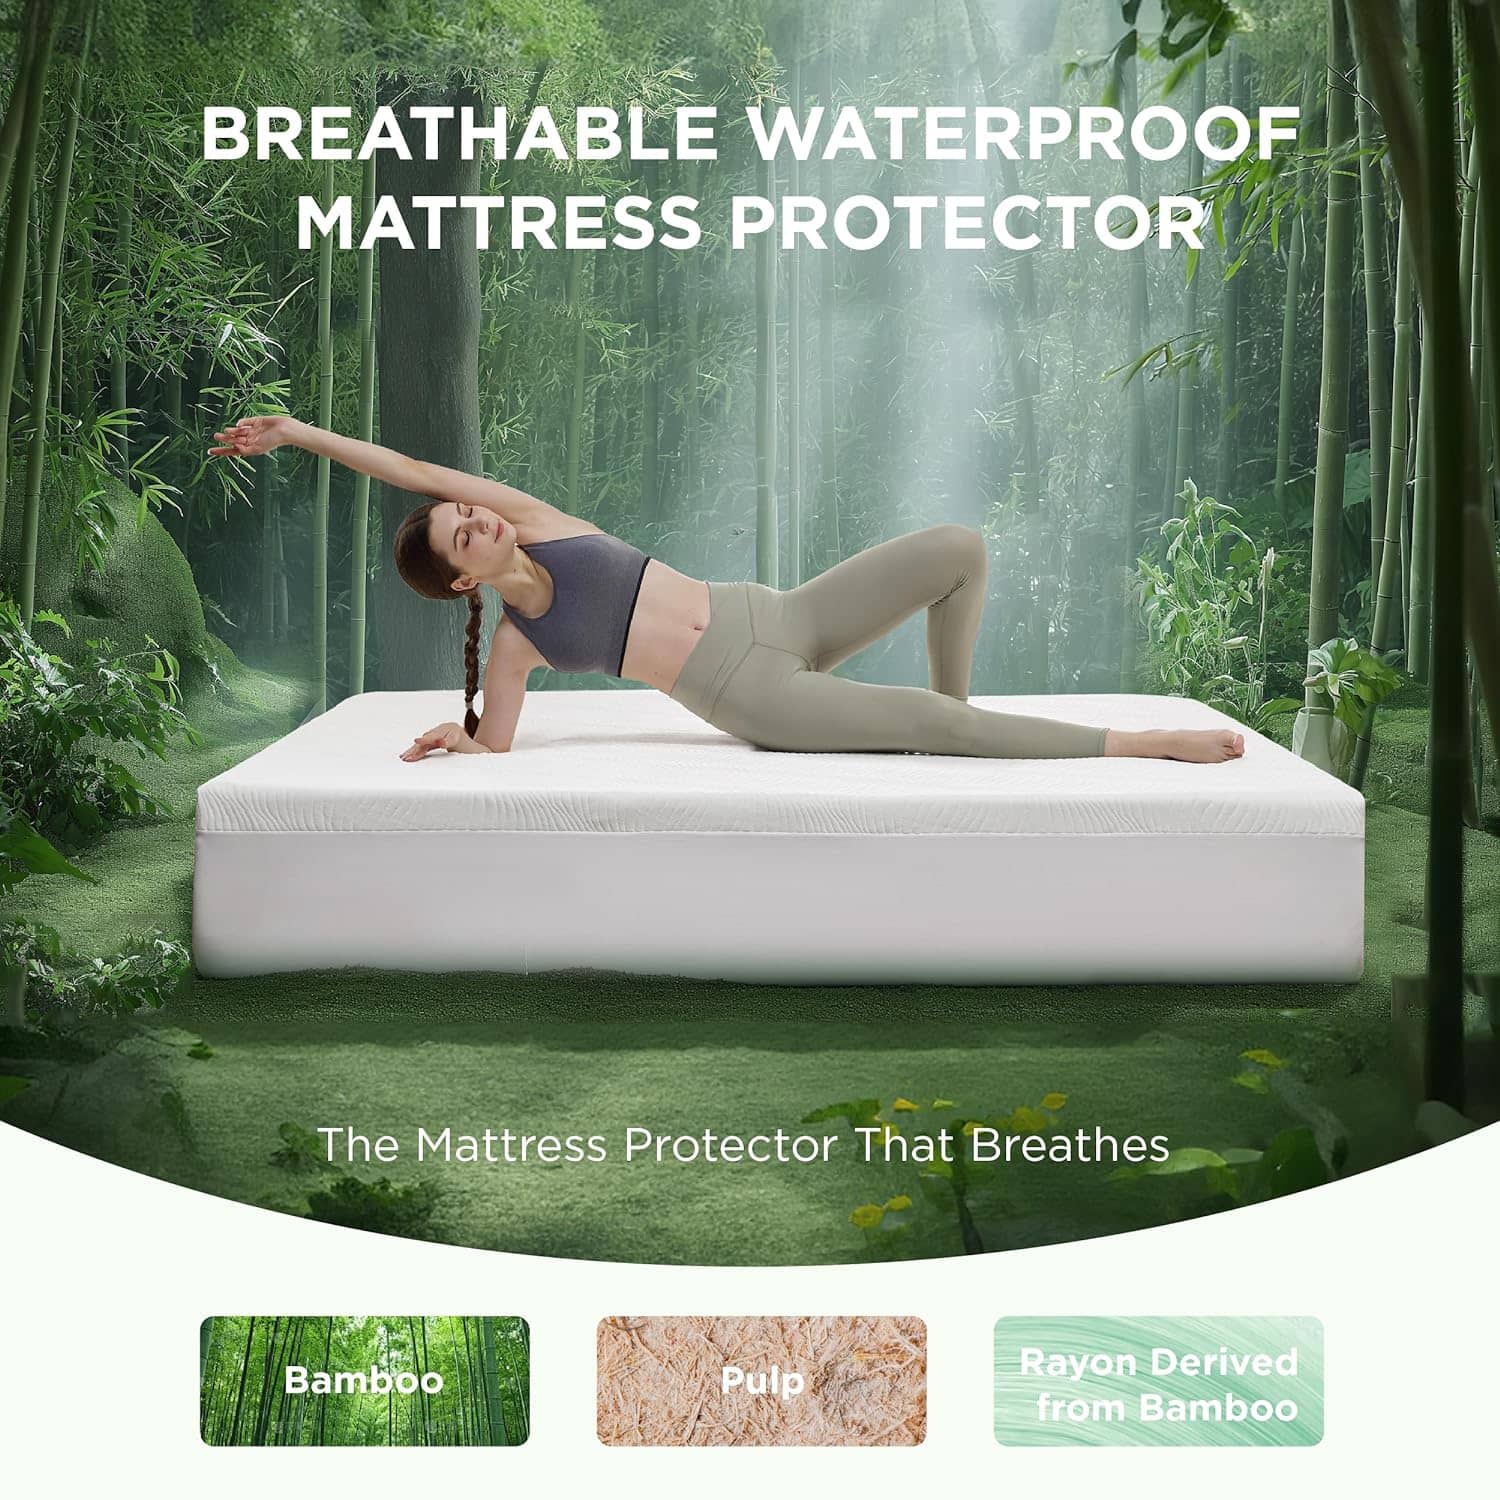 Breathable waterproof Mattress protector